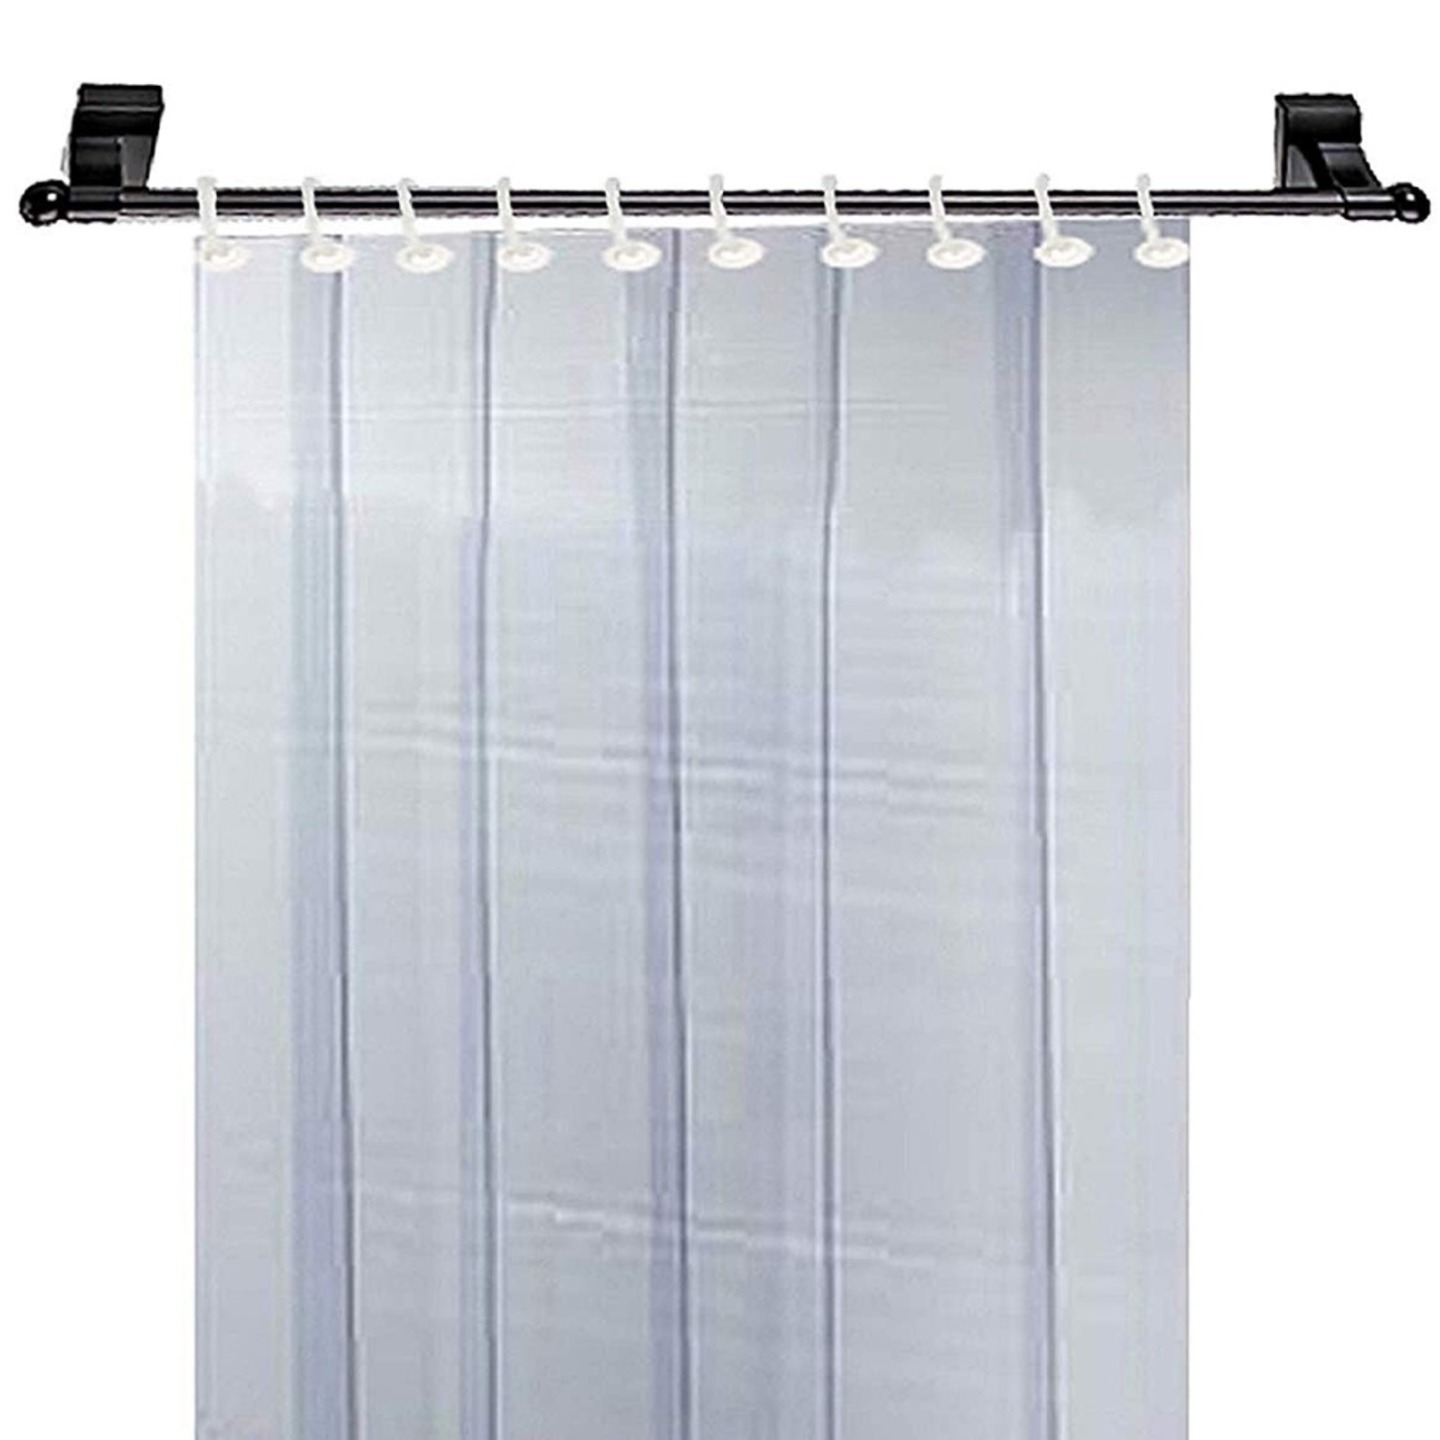 1 MM Thick PVC 6 Strips AC Curtain